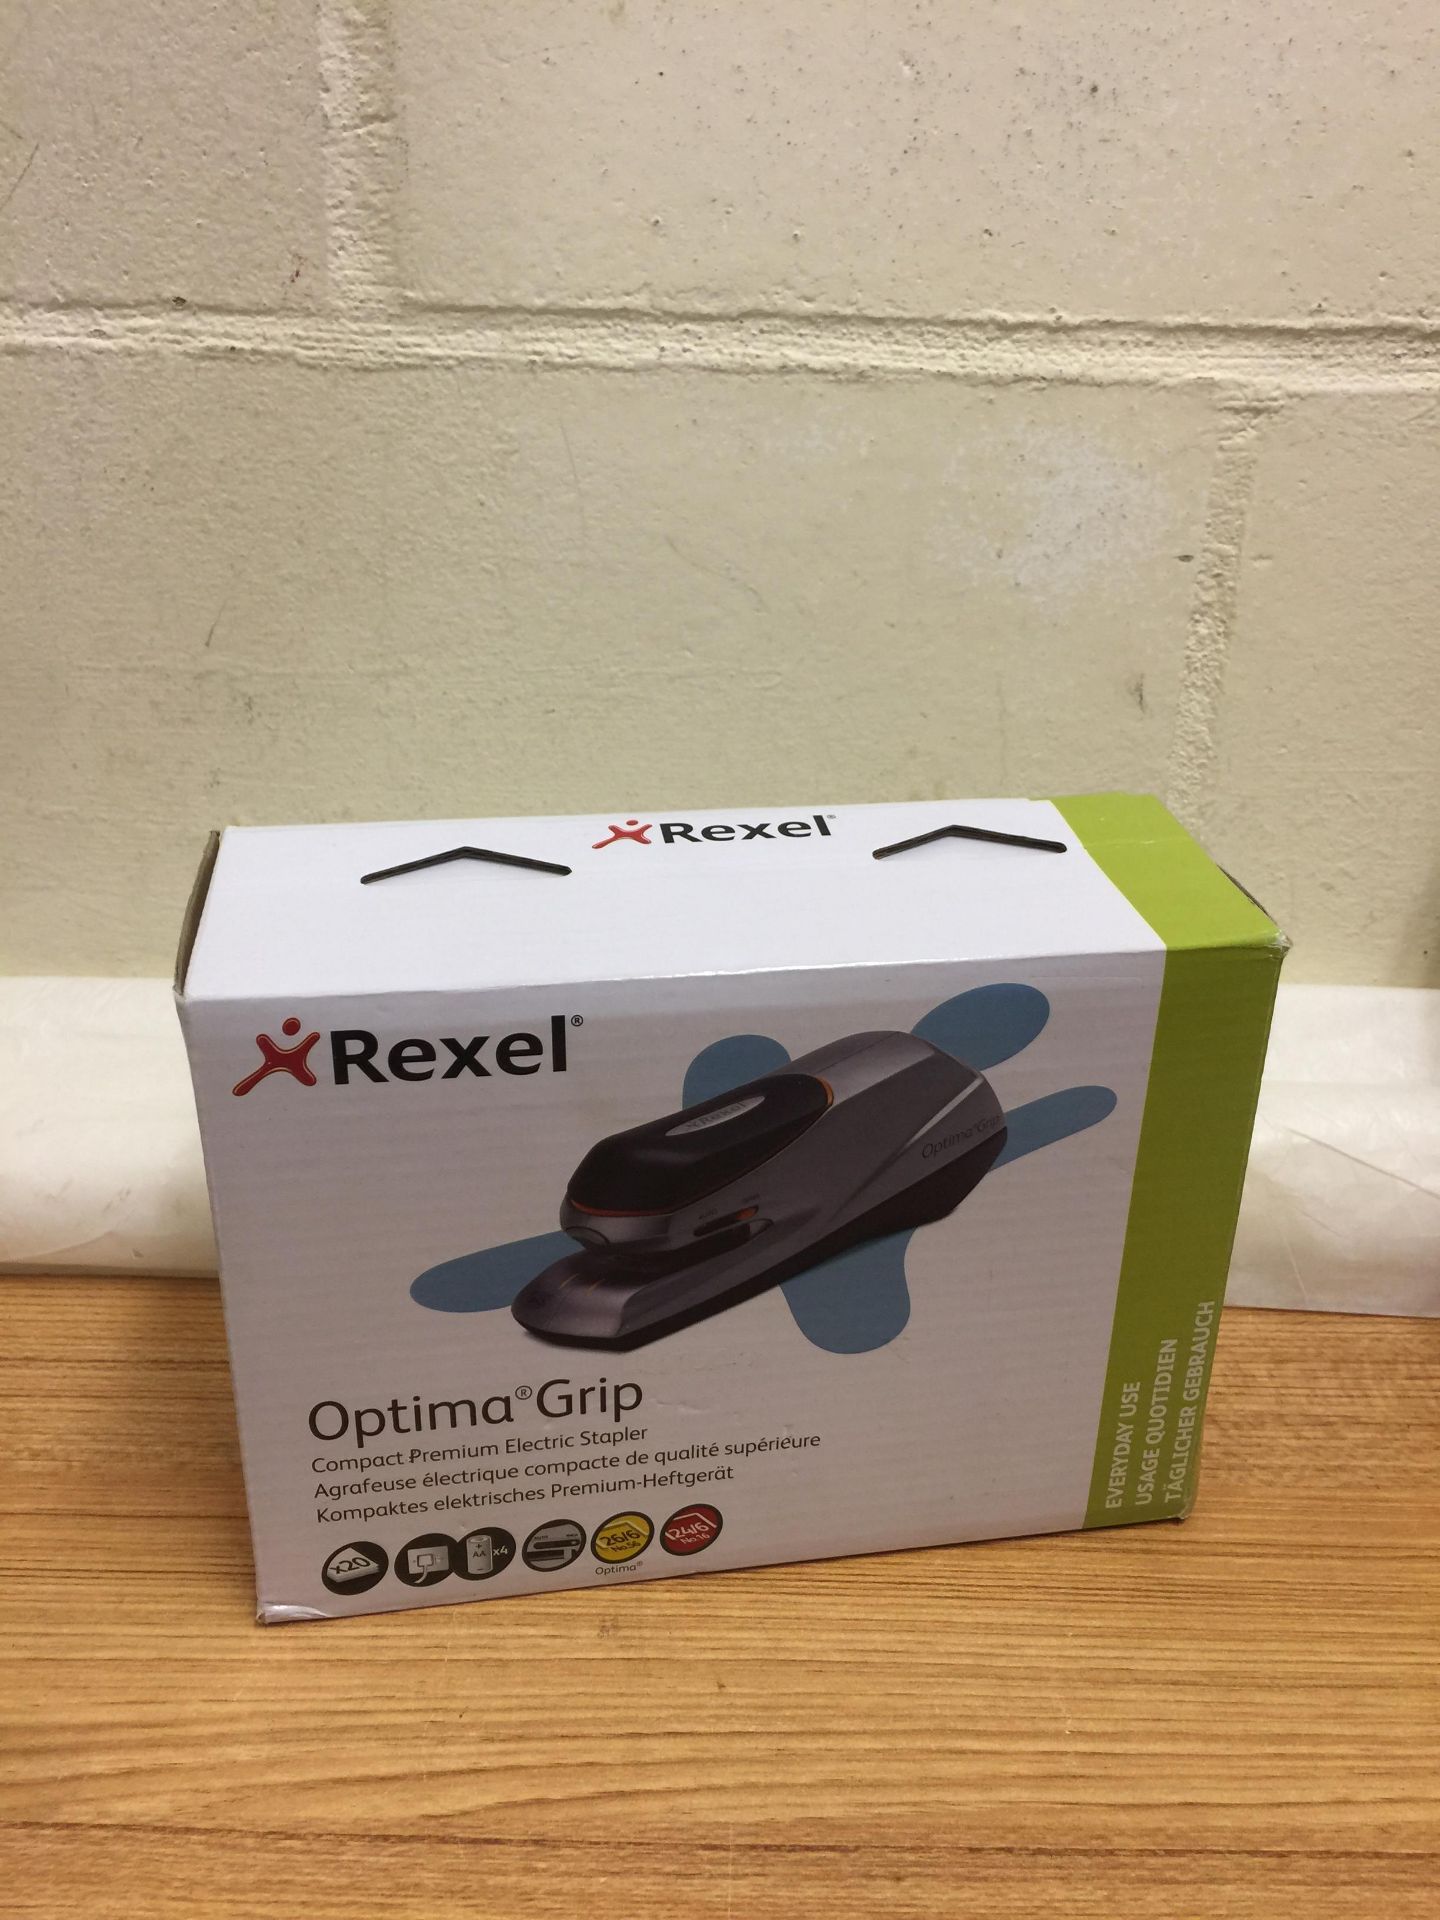 Rexel Optima Grip Electric Stapler RRP £75.99